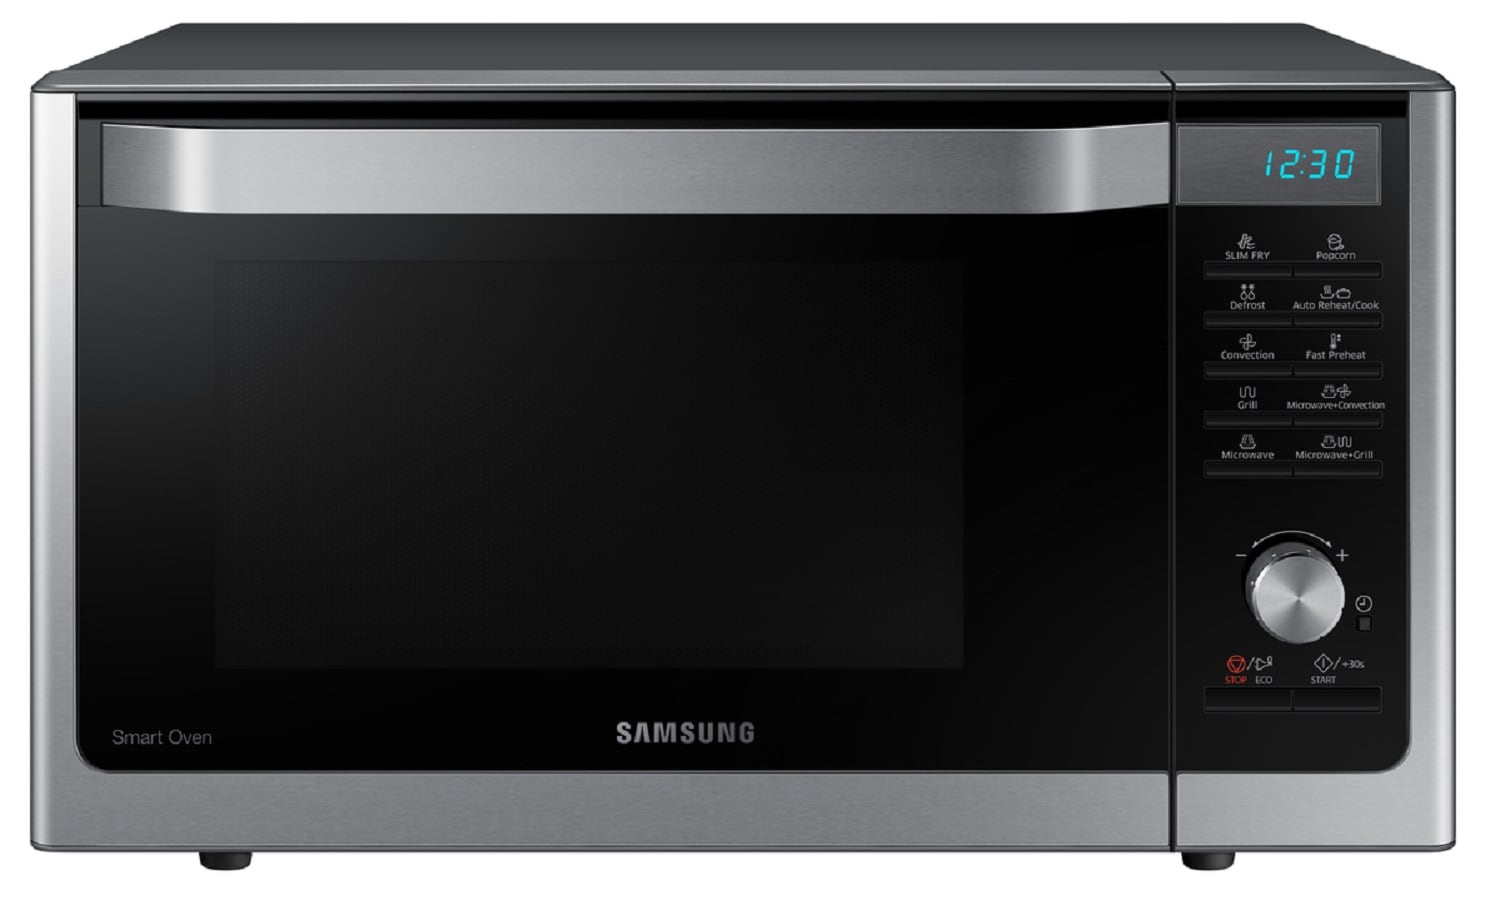 Samsung steam oven фото 37